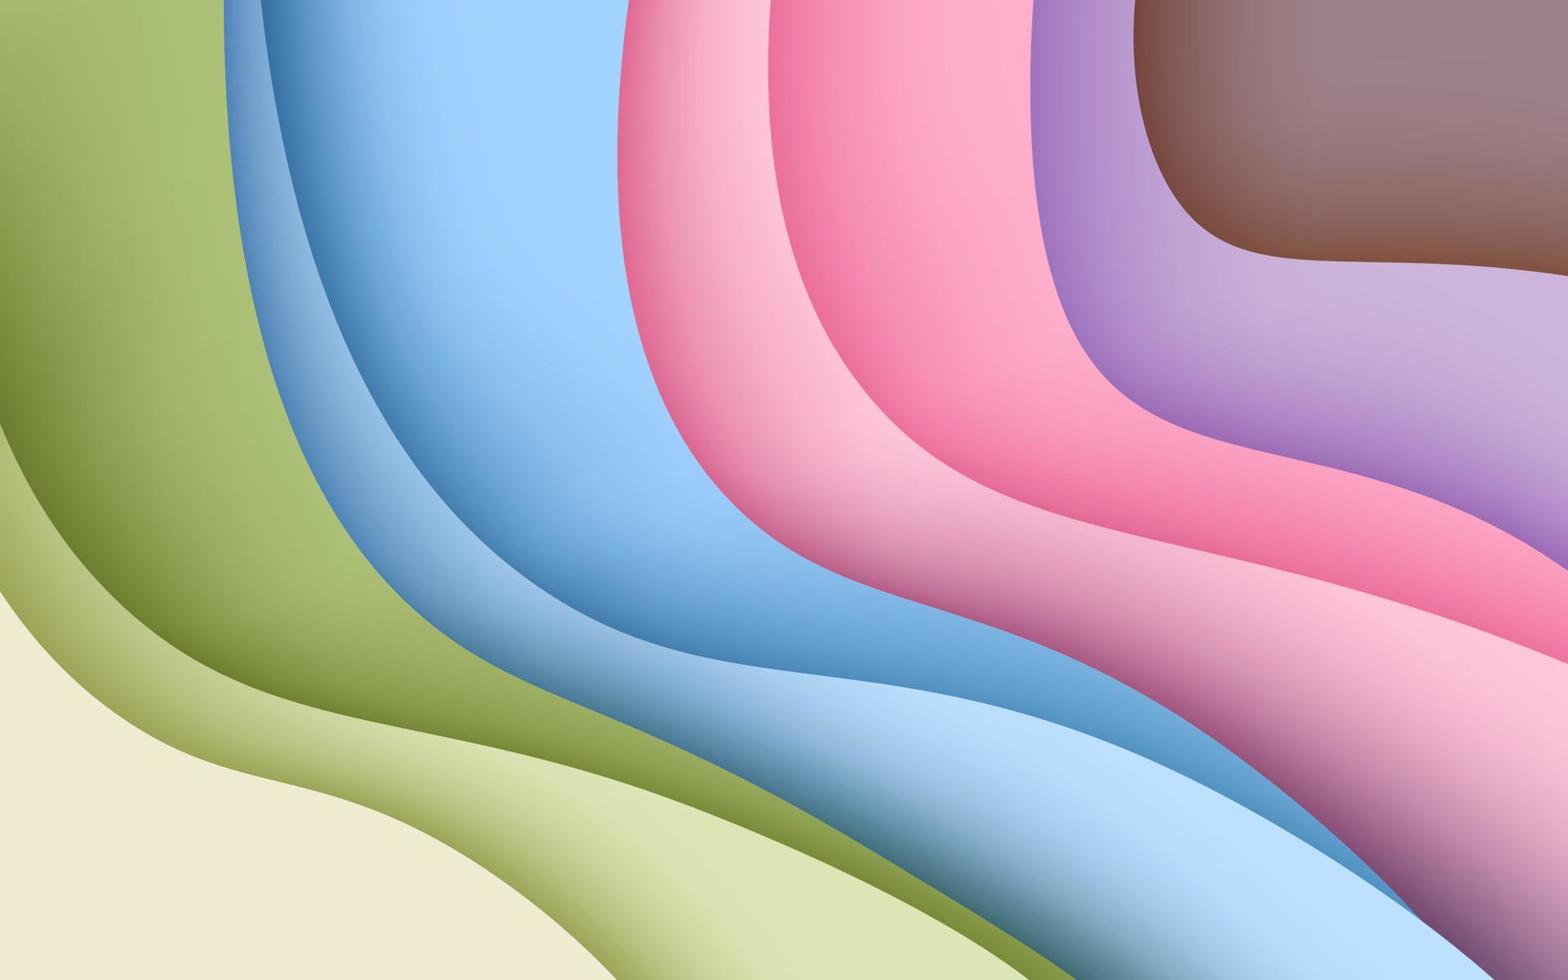 multi gekleurde abstract groente, blauw, roze. Purper zacht golvend papercut overlappen lagen achtergrond. eps10 vector